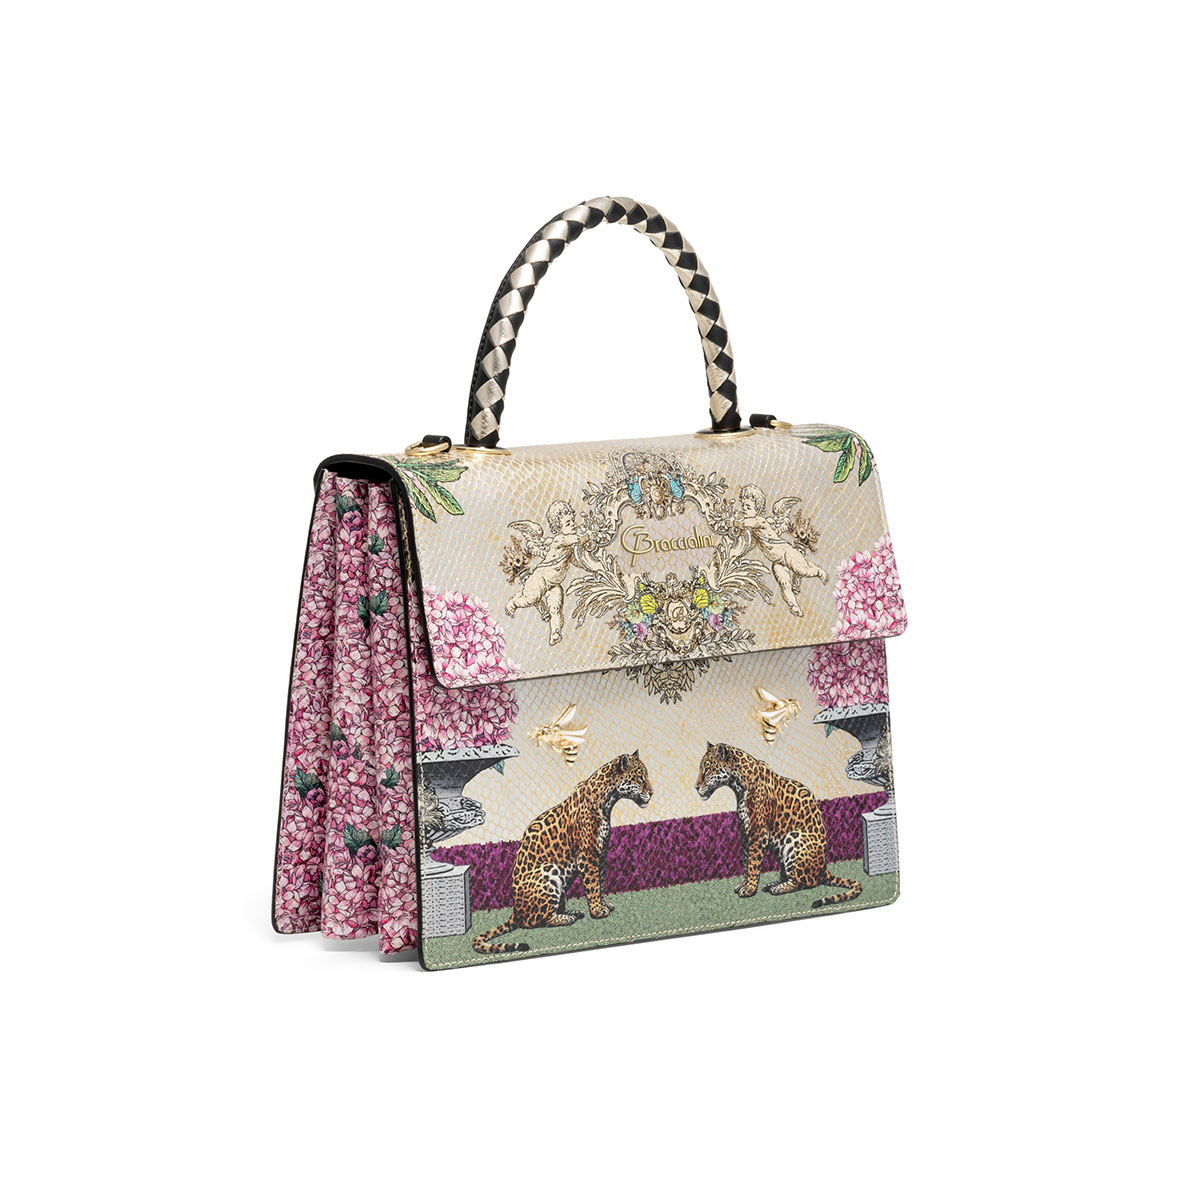 Handbag Audrey  8052991189204 - Graziella Braccialini Official